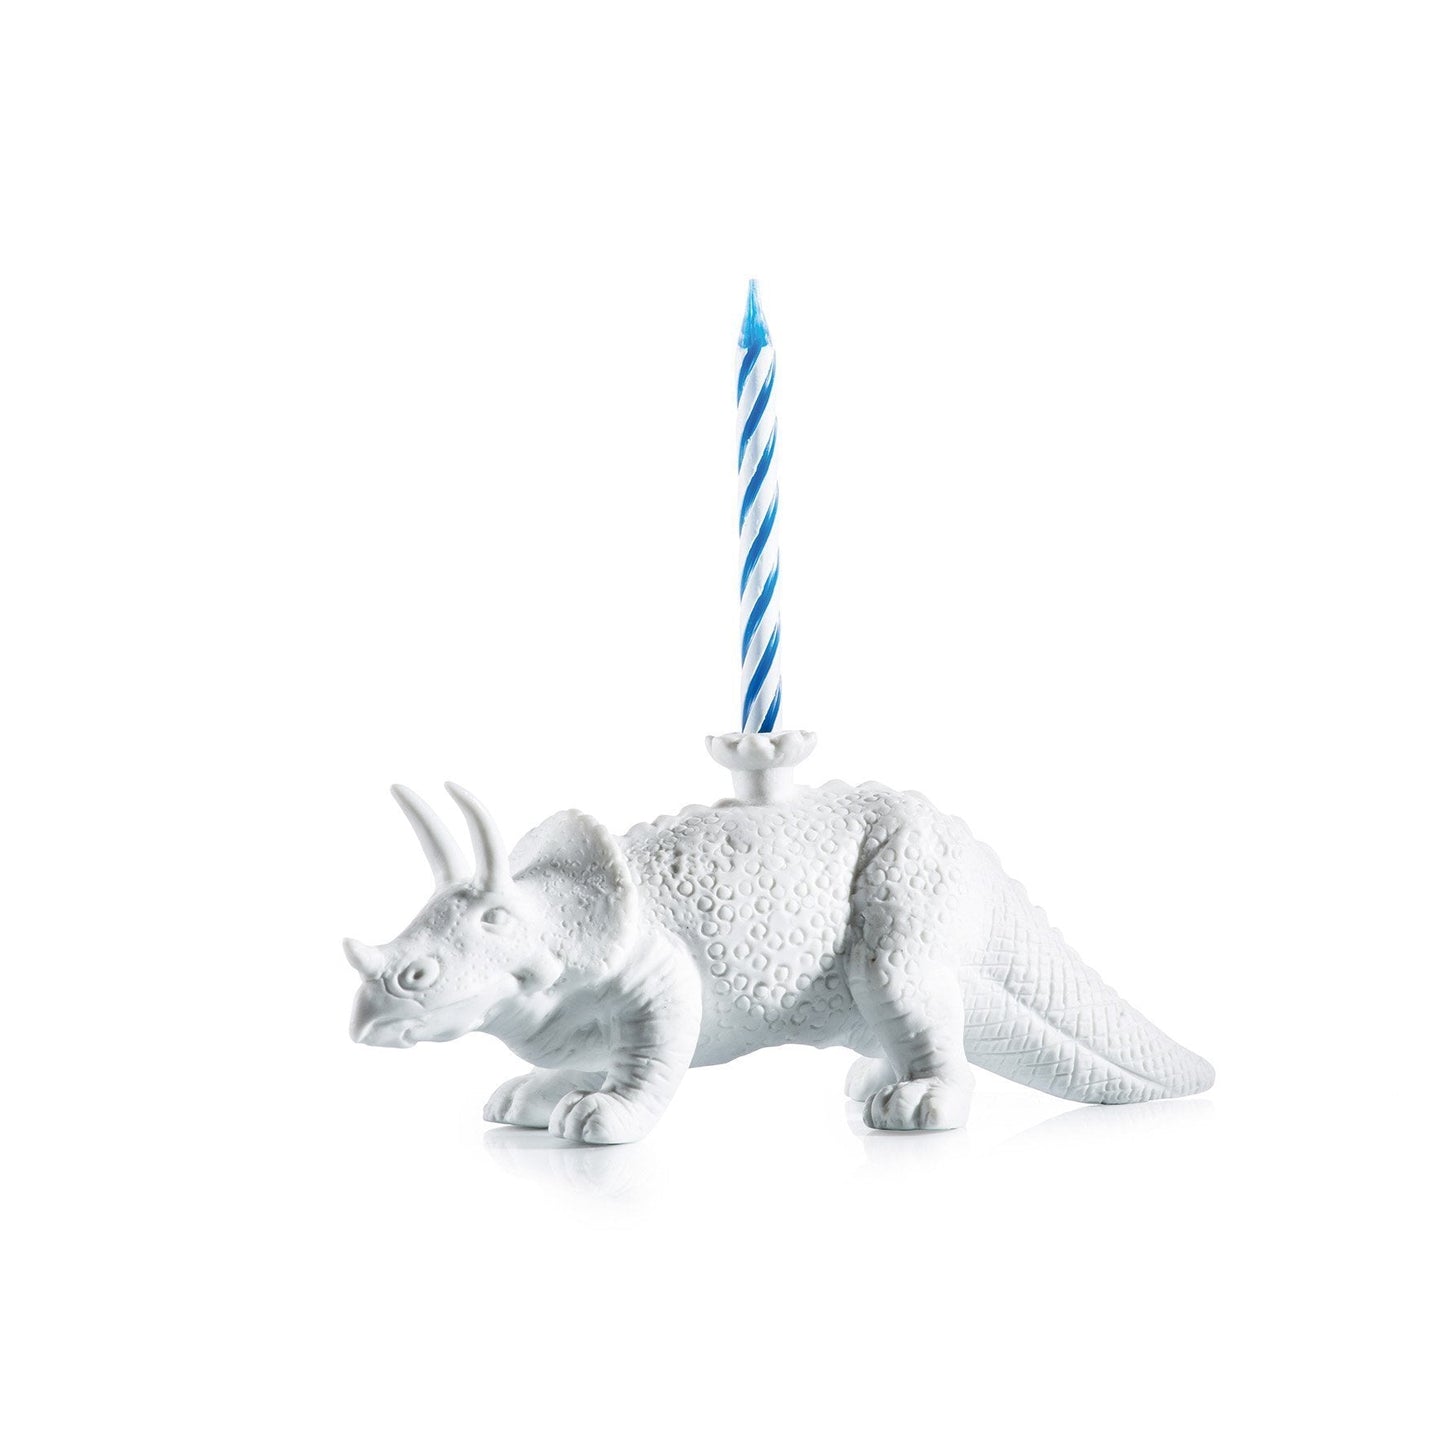 Bougeoir d'Anniversaire Dinosaure Donkey | Boutique d'objets cadeaux designs kokochao.com